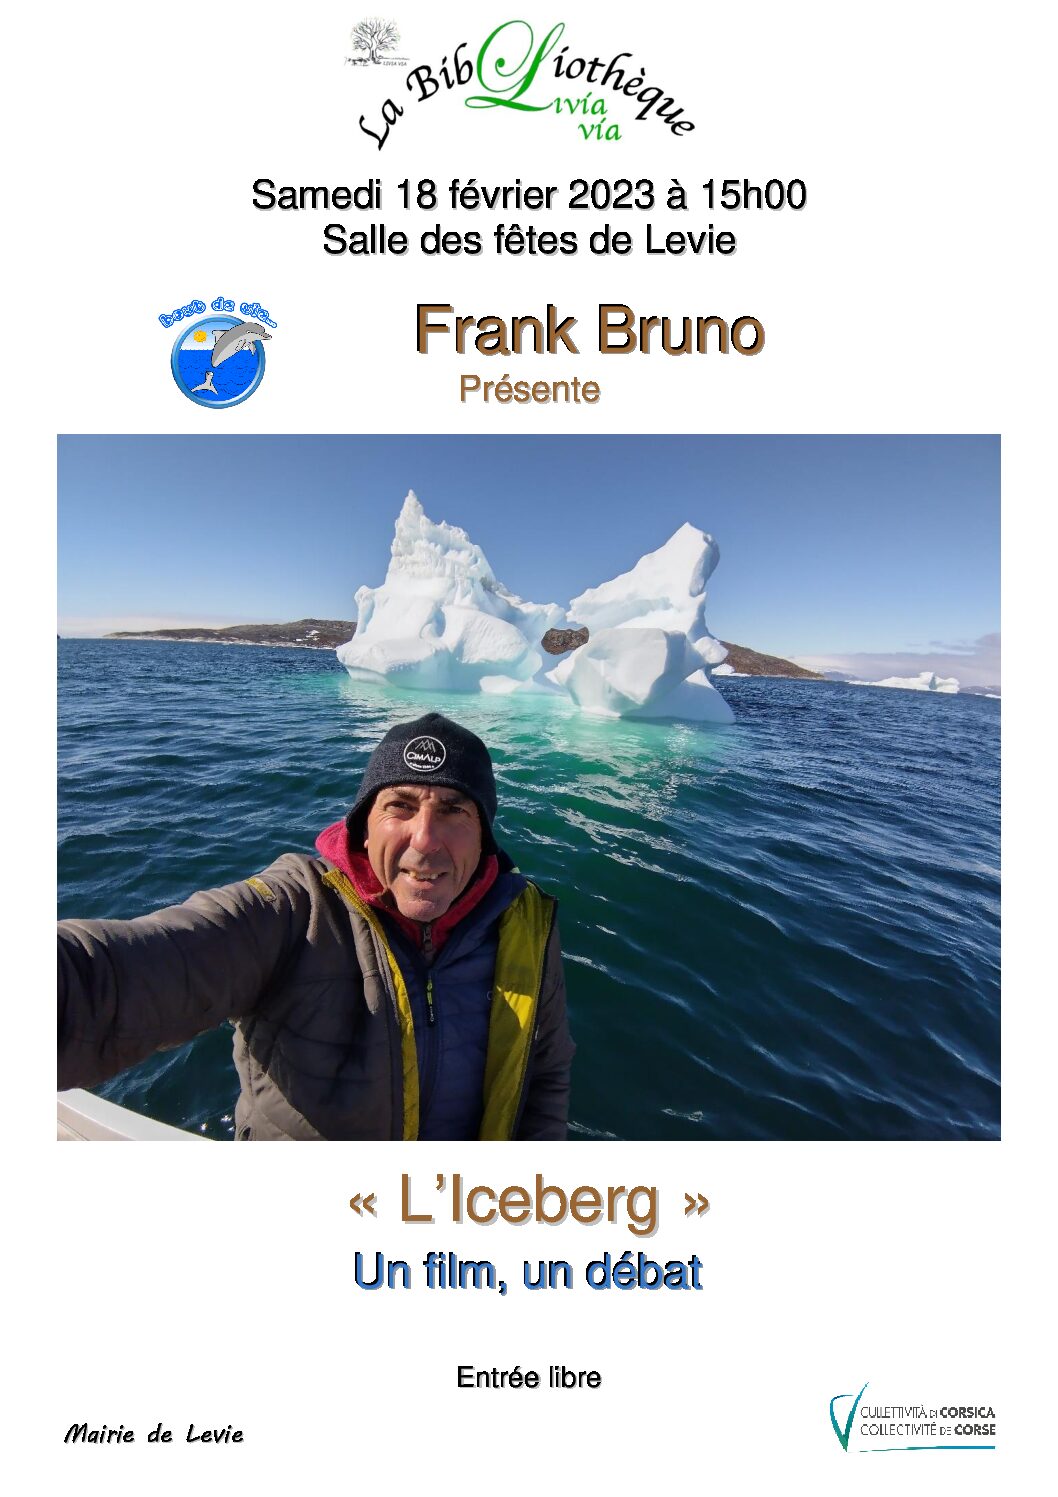 Frank Bruno présente "L'Iceberg" : film et débat